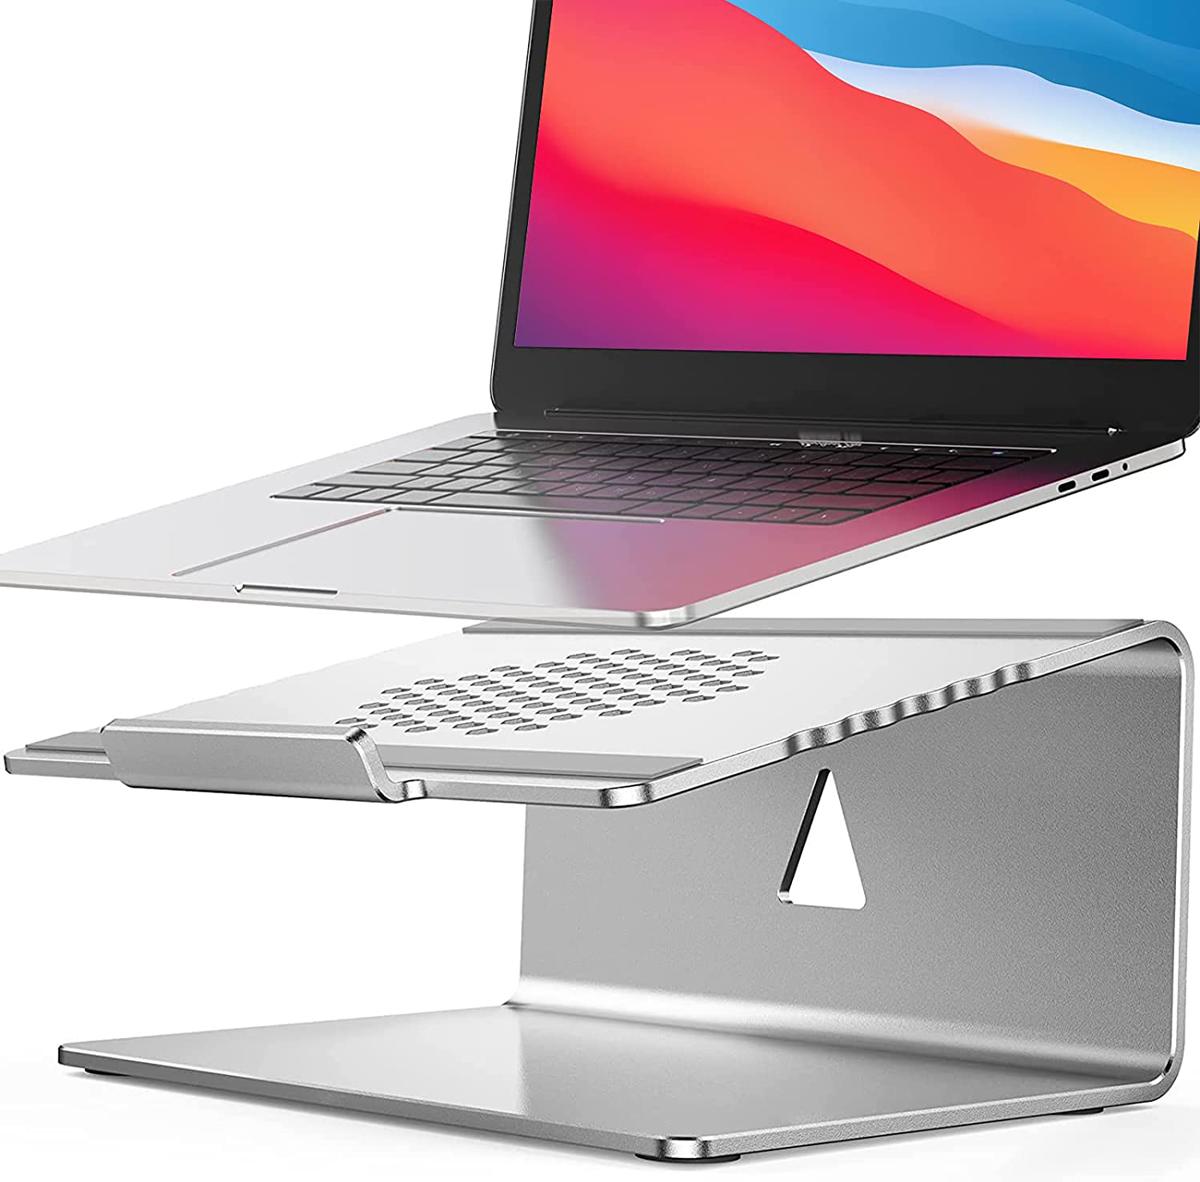 17in Loryergo Ergonomic Aluminum Laptop Riser Stand for $11.83 Shipped